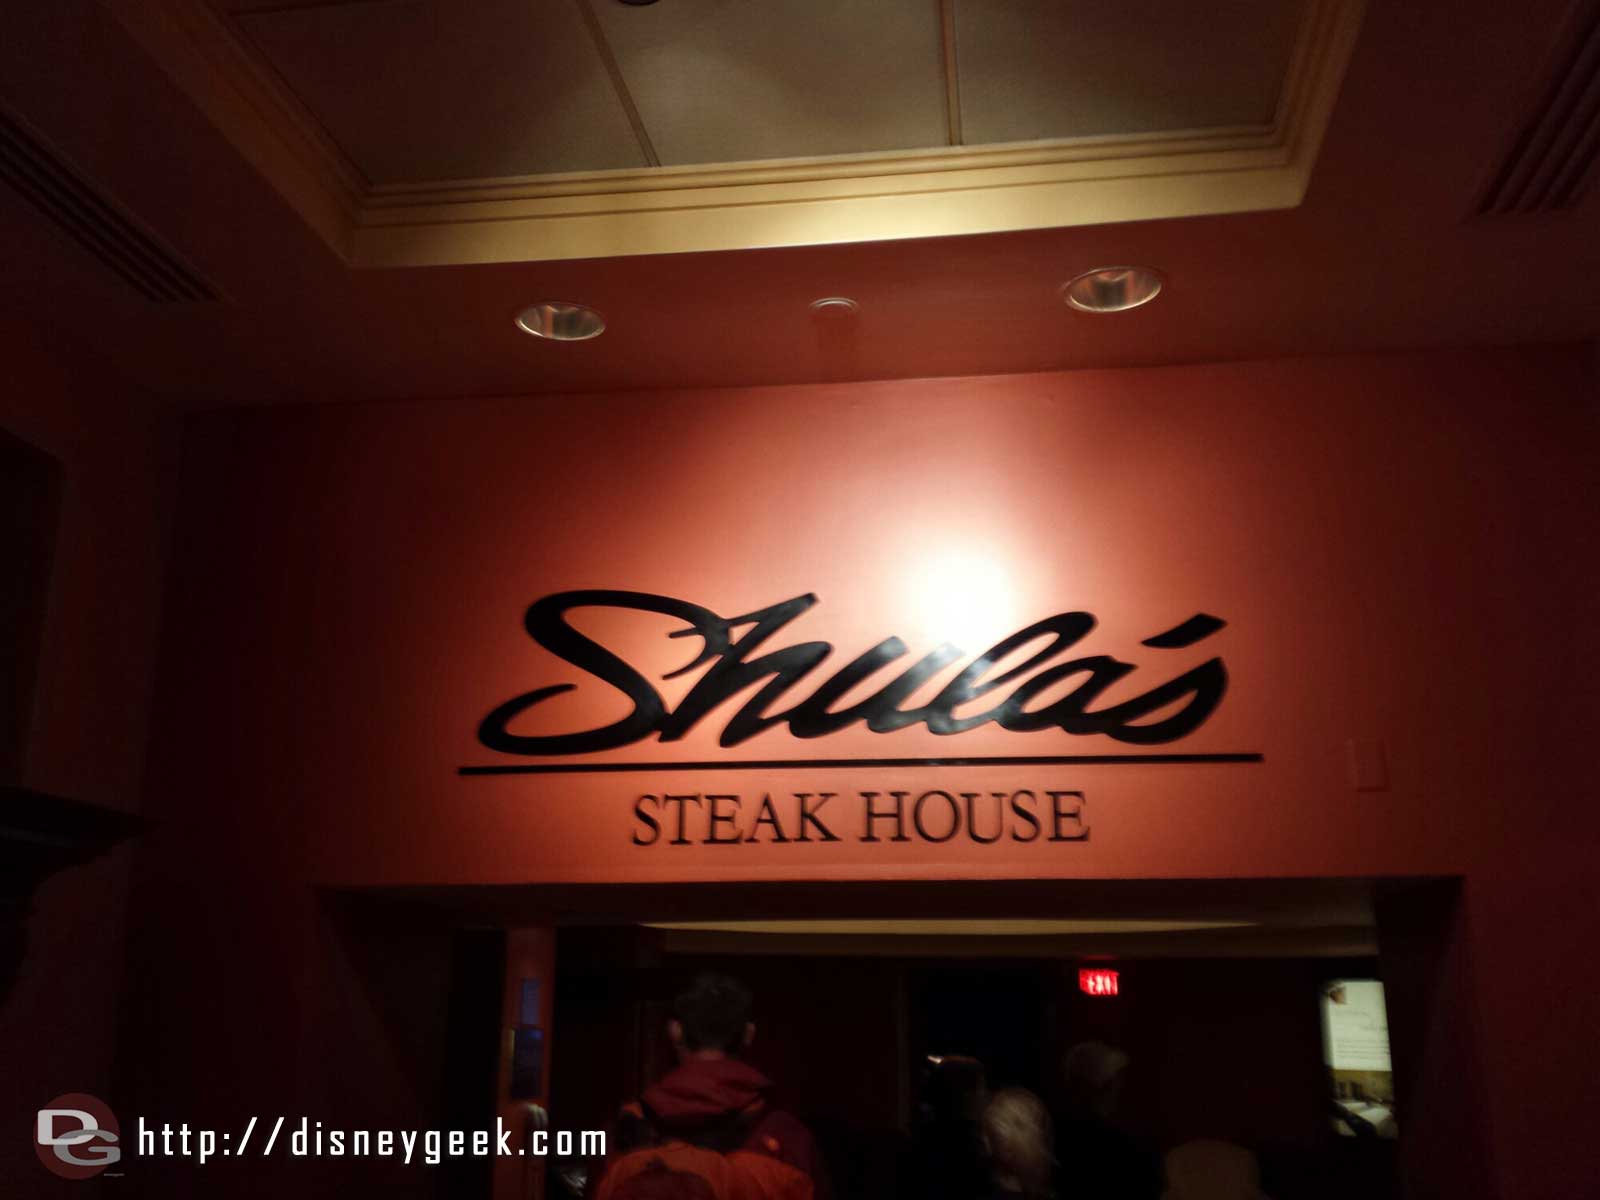 Shula's Steakhouse sign